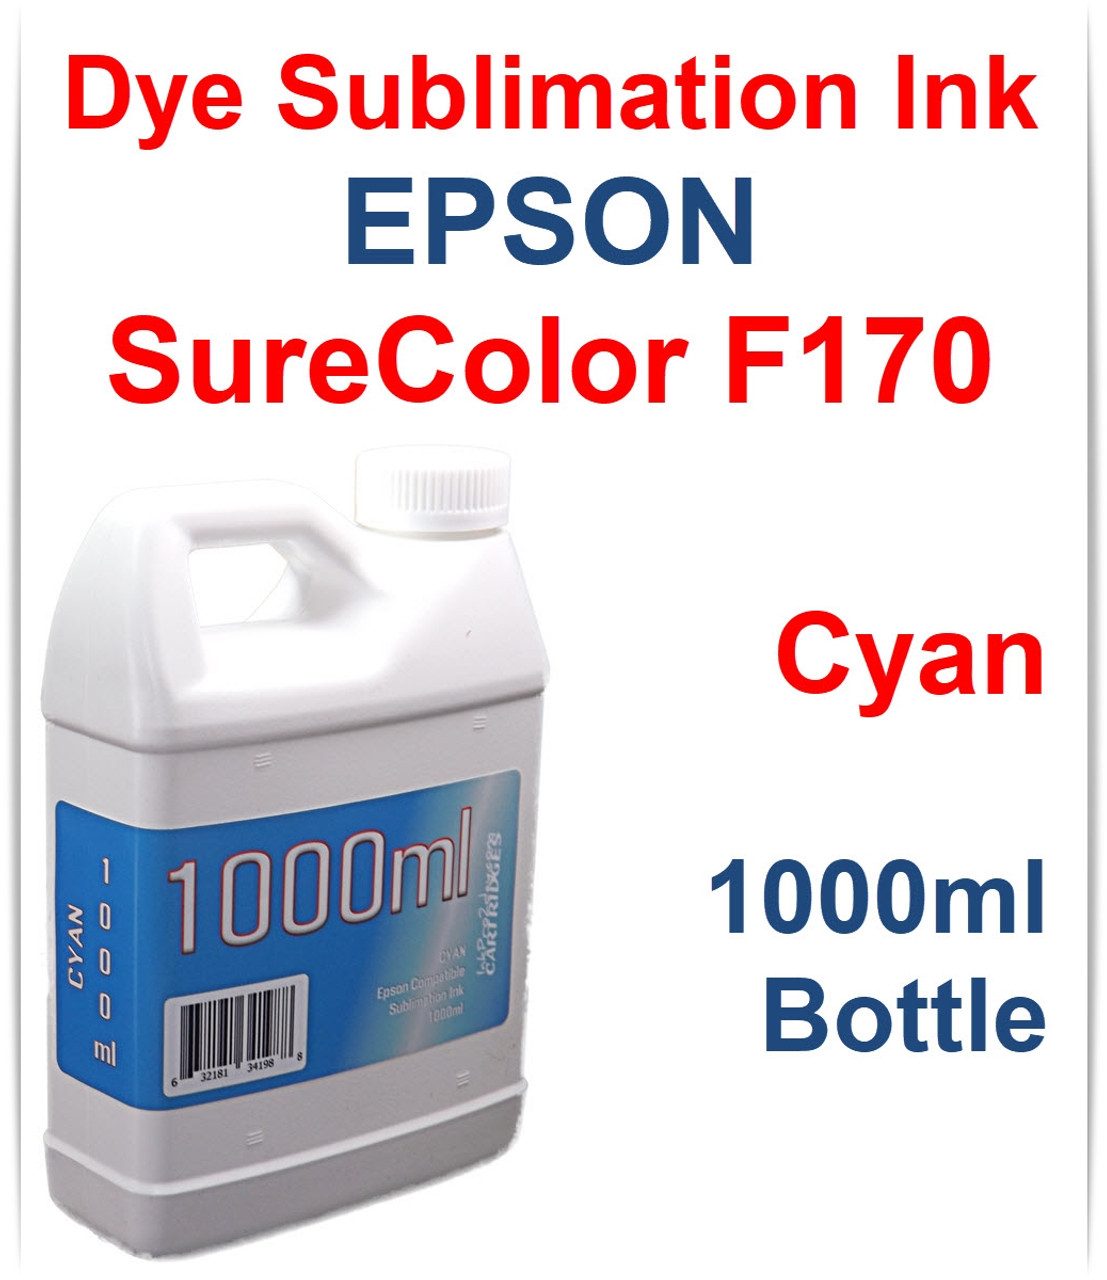 Cyan 1000ml bottle Dye Sublimation Ink for EPSON SureColor F170 printer